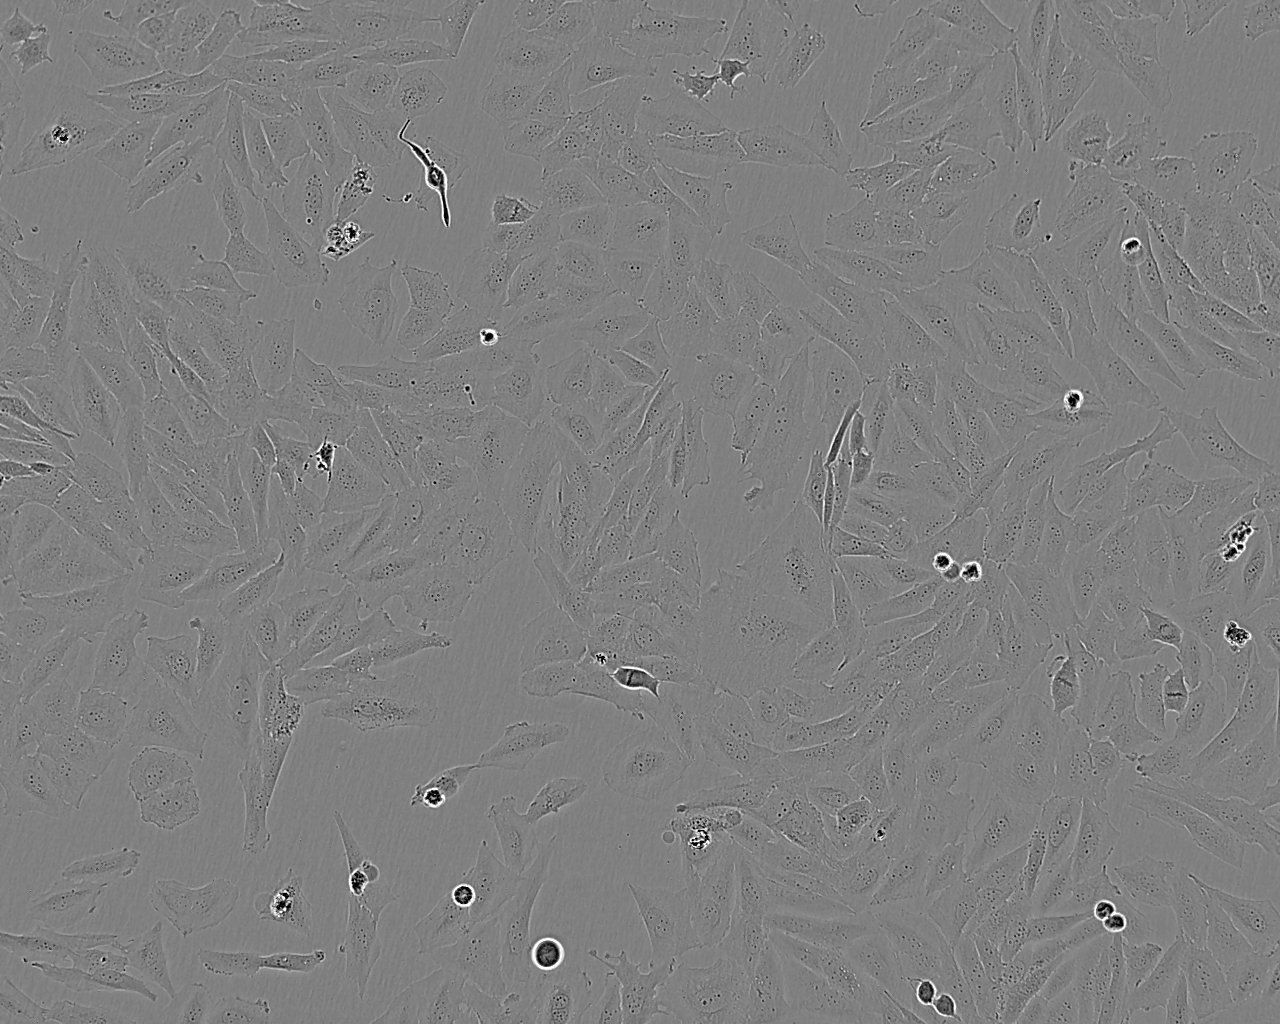 NCI-H226 Cells|人肺鳞癌细胞系,NCI-H226 Cells